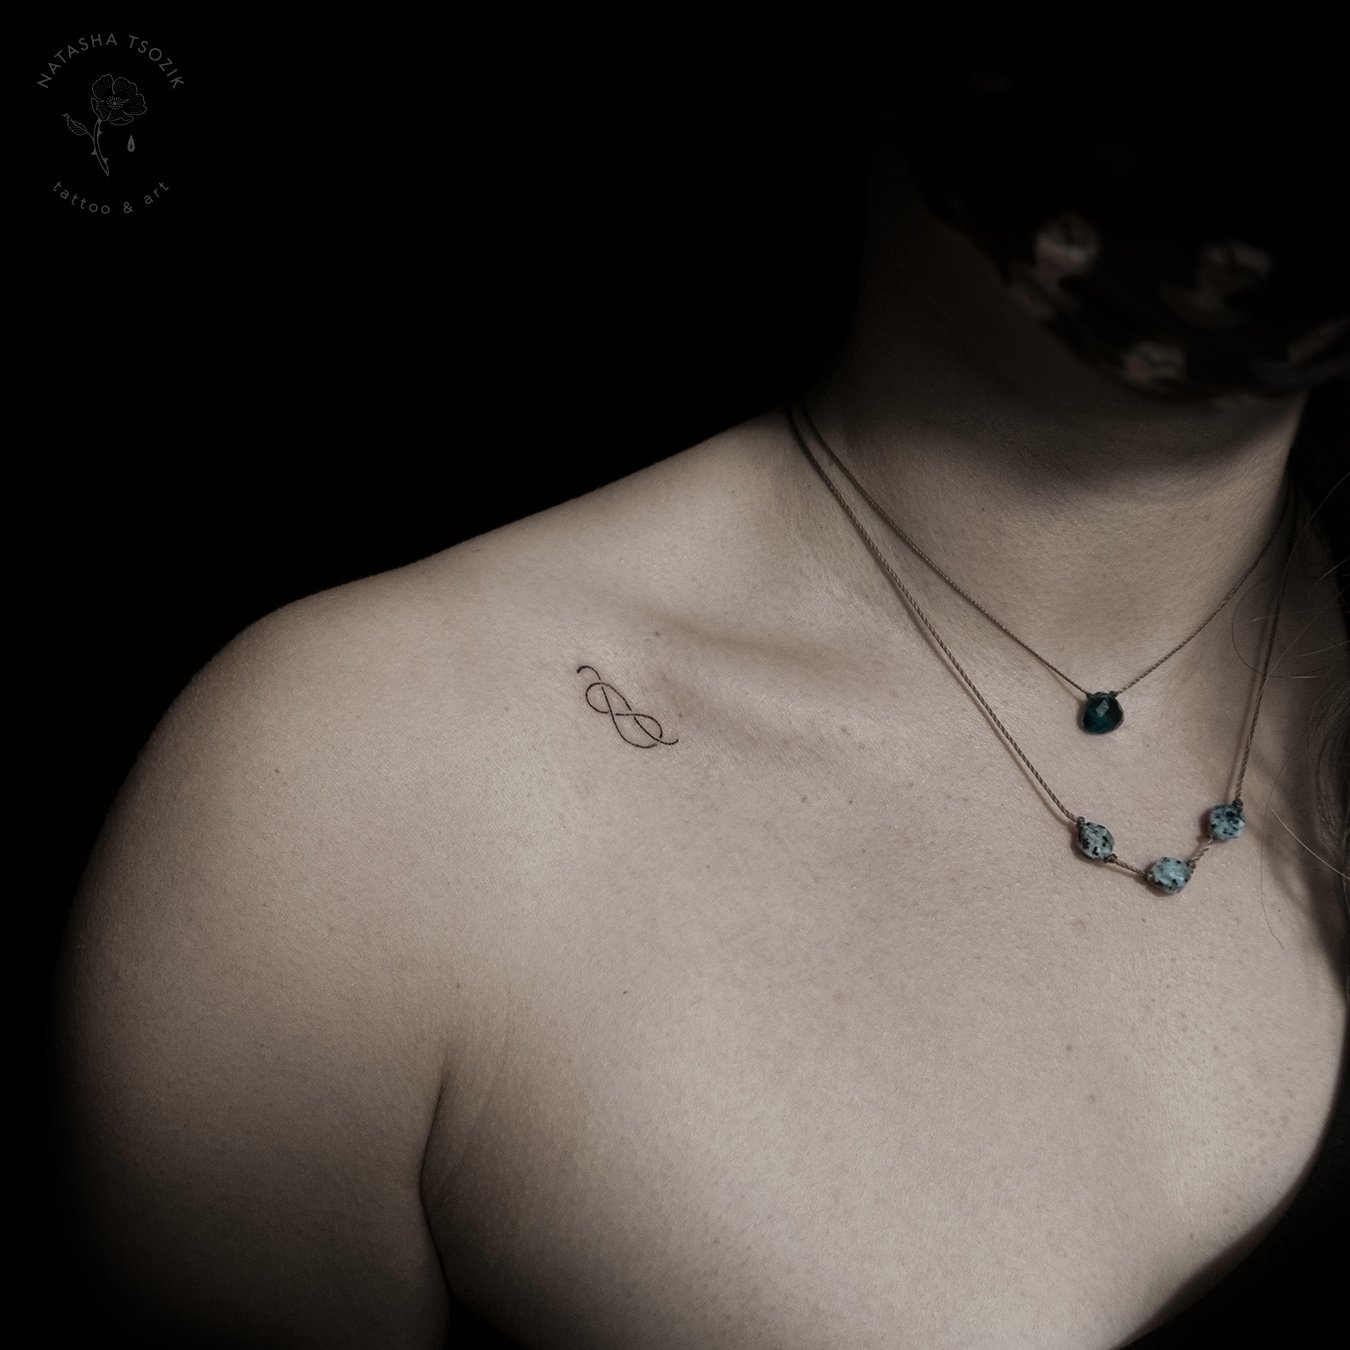 Infinity Small fine line tattoo on collarbone by Natasha Tsozik